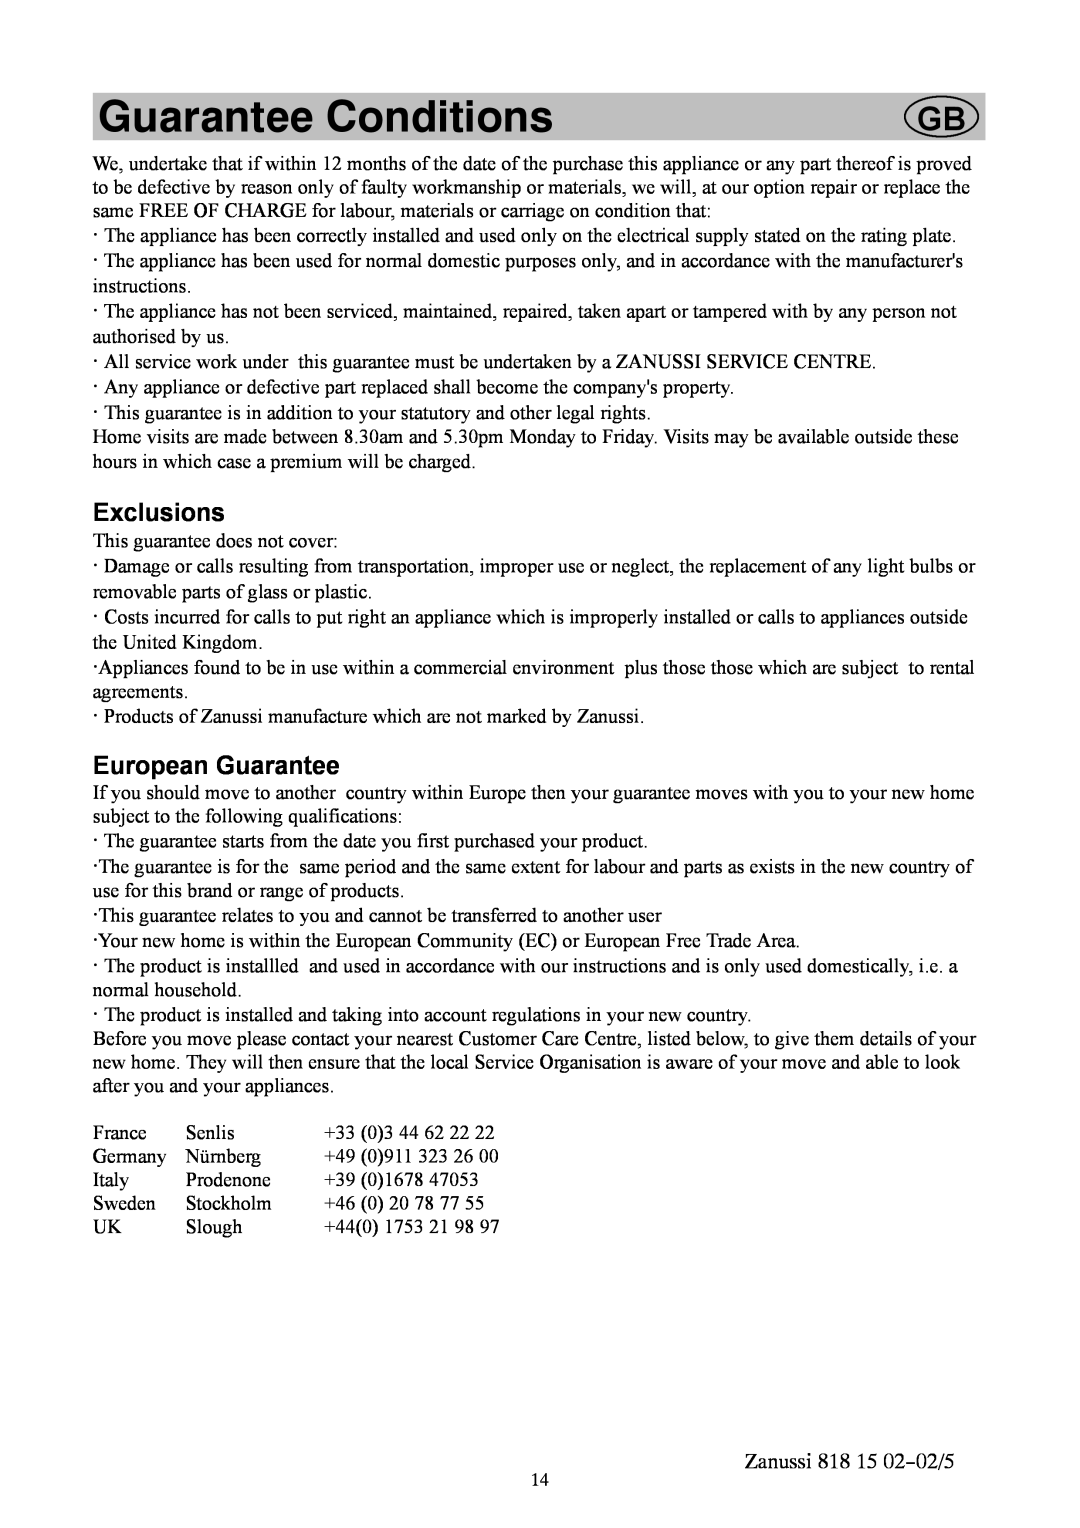 Zanussi ZVR11R manual Guarantee Conditions, Exclusions, European Guarantee, Zanussi 818 15 02--02/5 